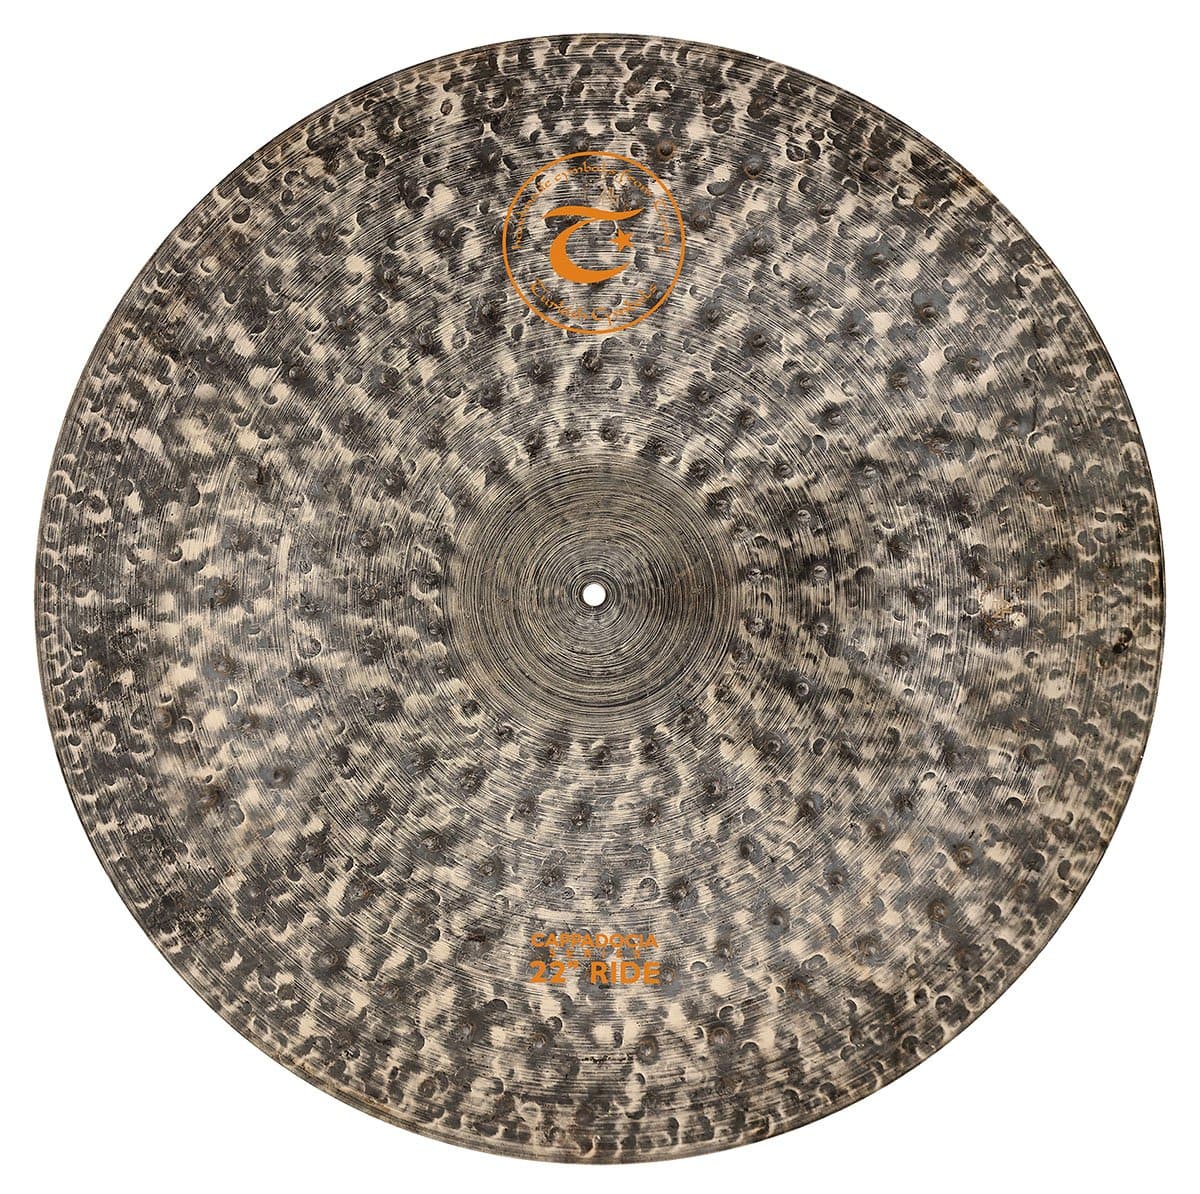 Turkish Cappadocia Ride Cymbal 22" 2478 grams